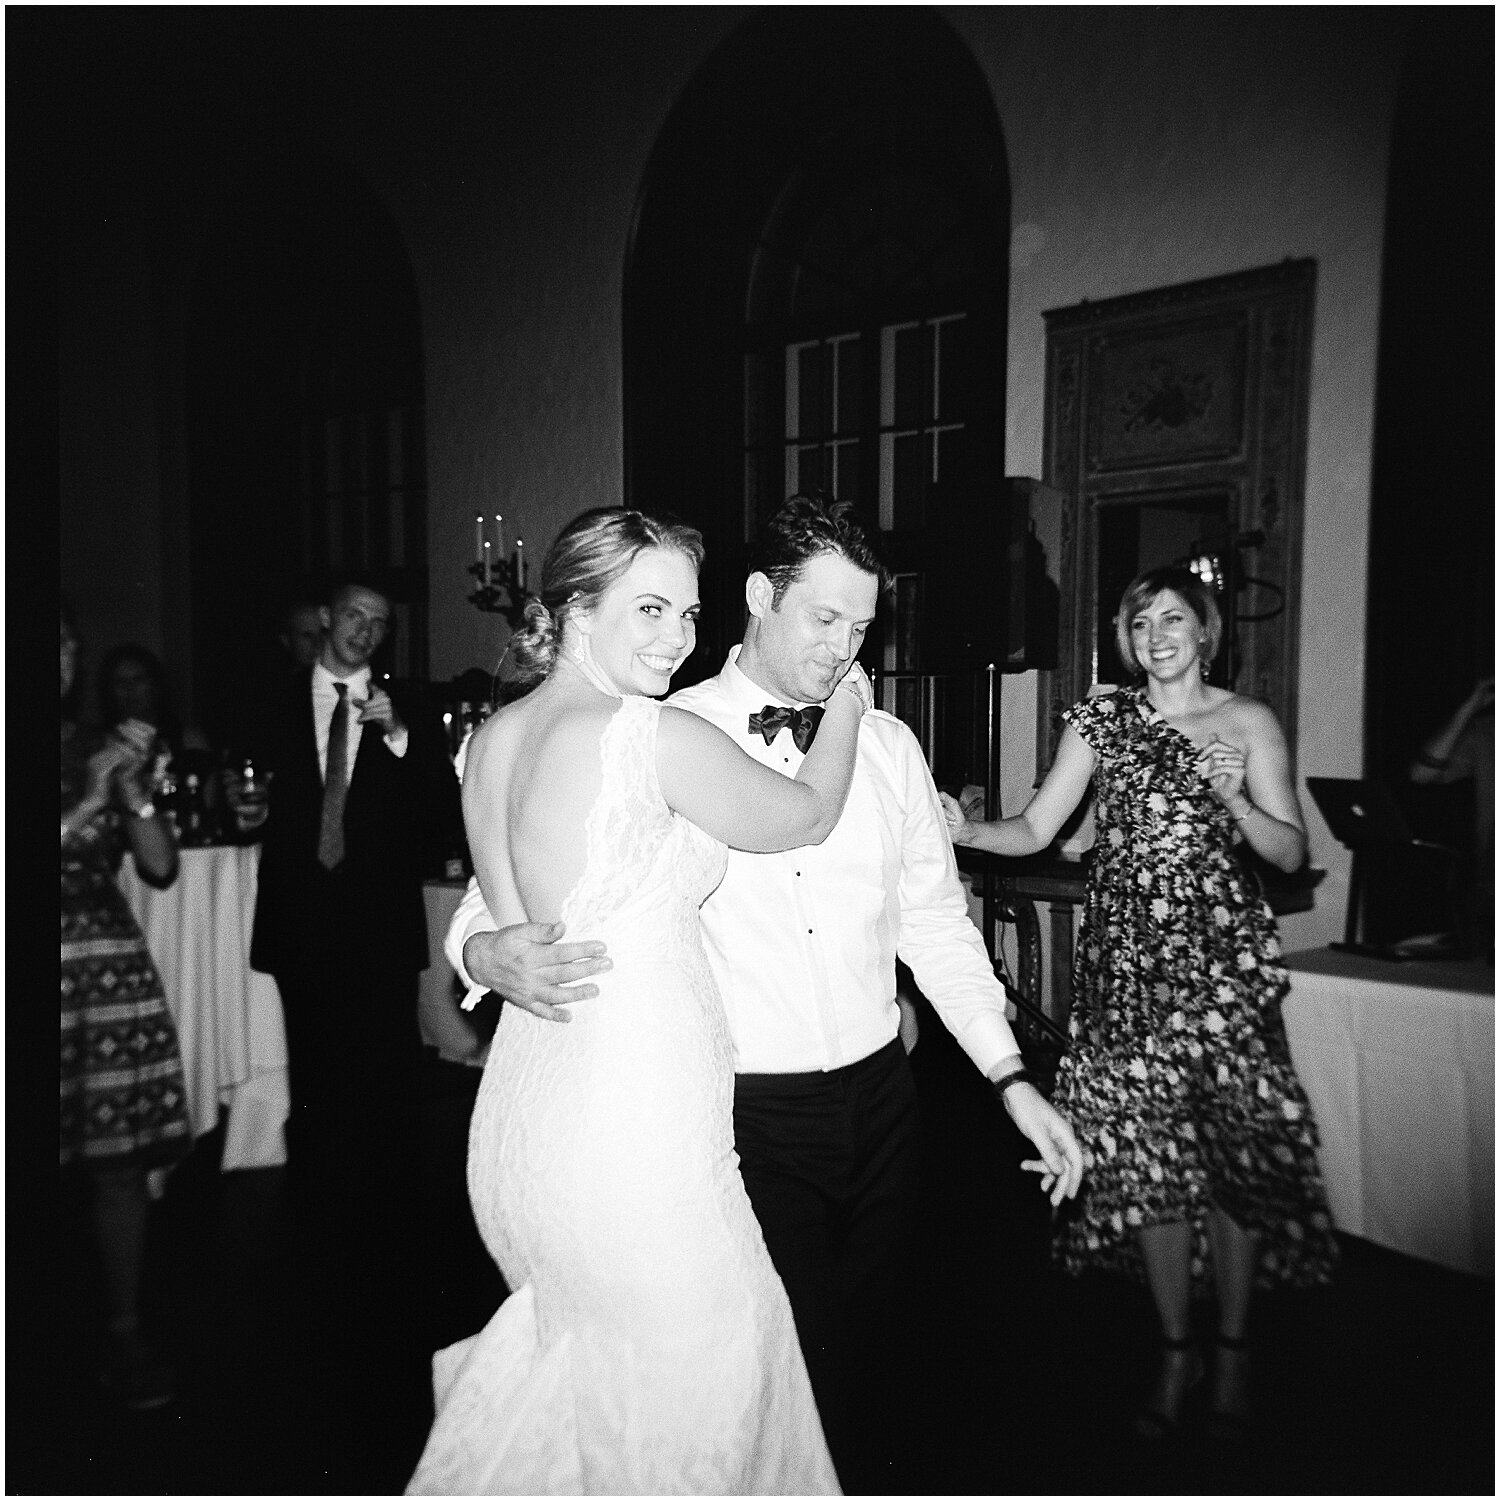  bride and groom dancing  